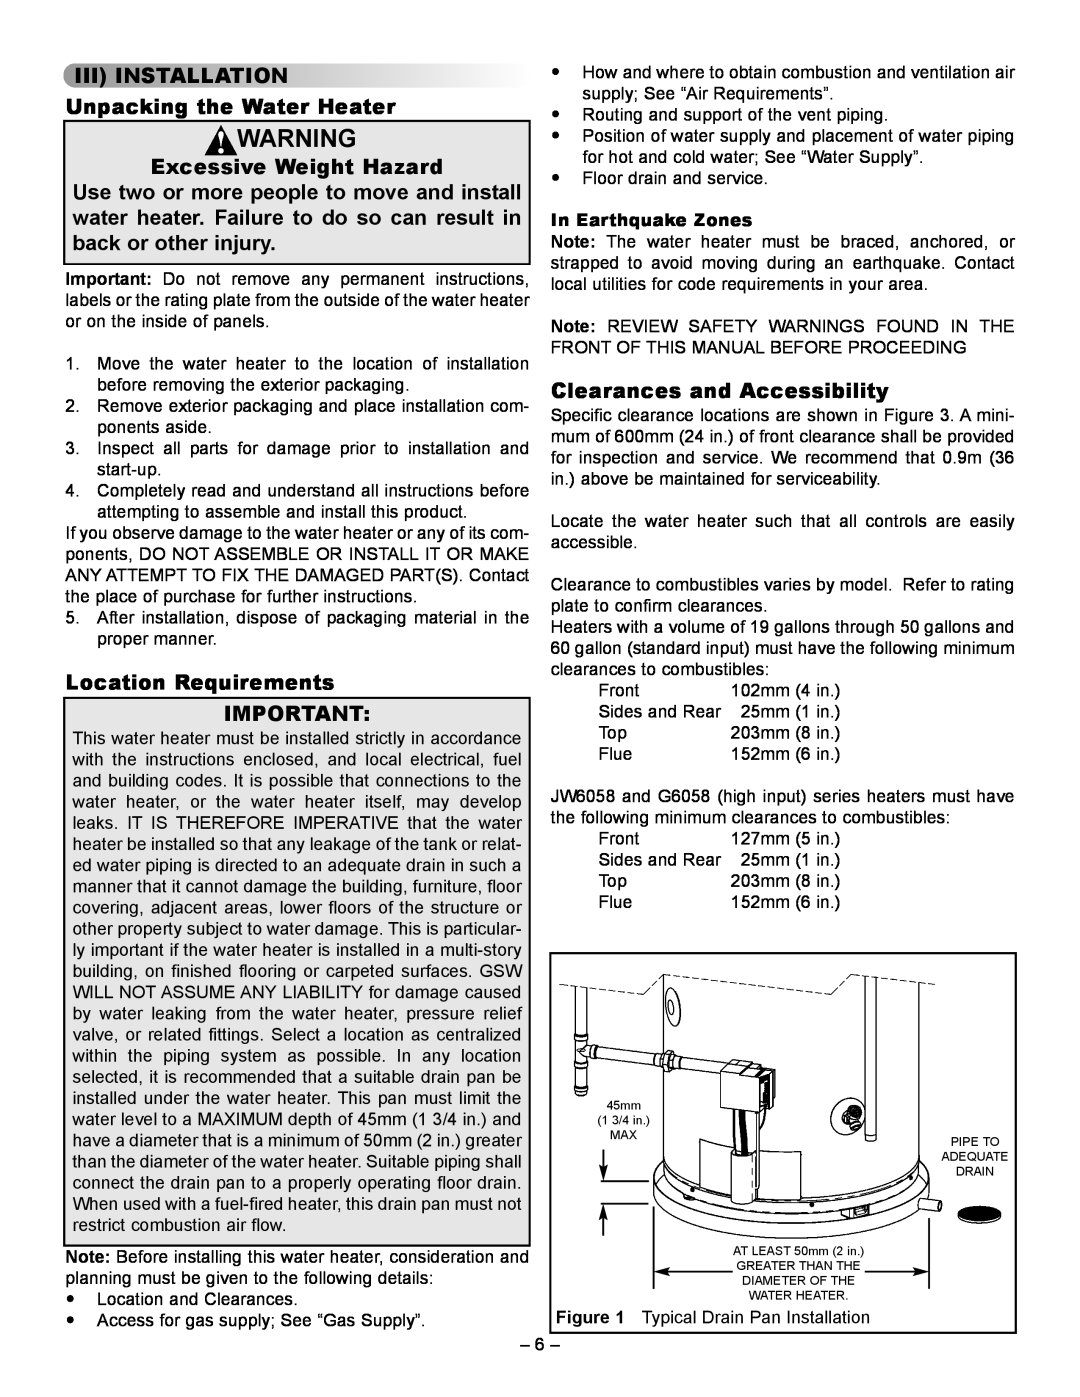 GSW 72090 IIIINSTALLATION Unpacking the Water Heater, Excessive Weight Hazard, Location Requirements, In Earthquake Zones 